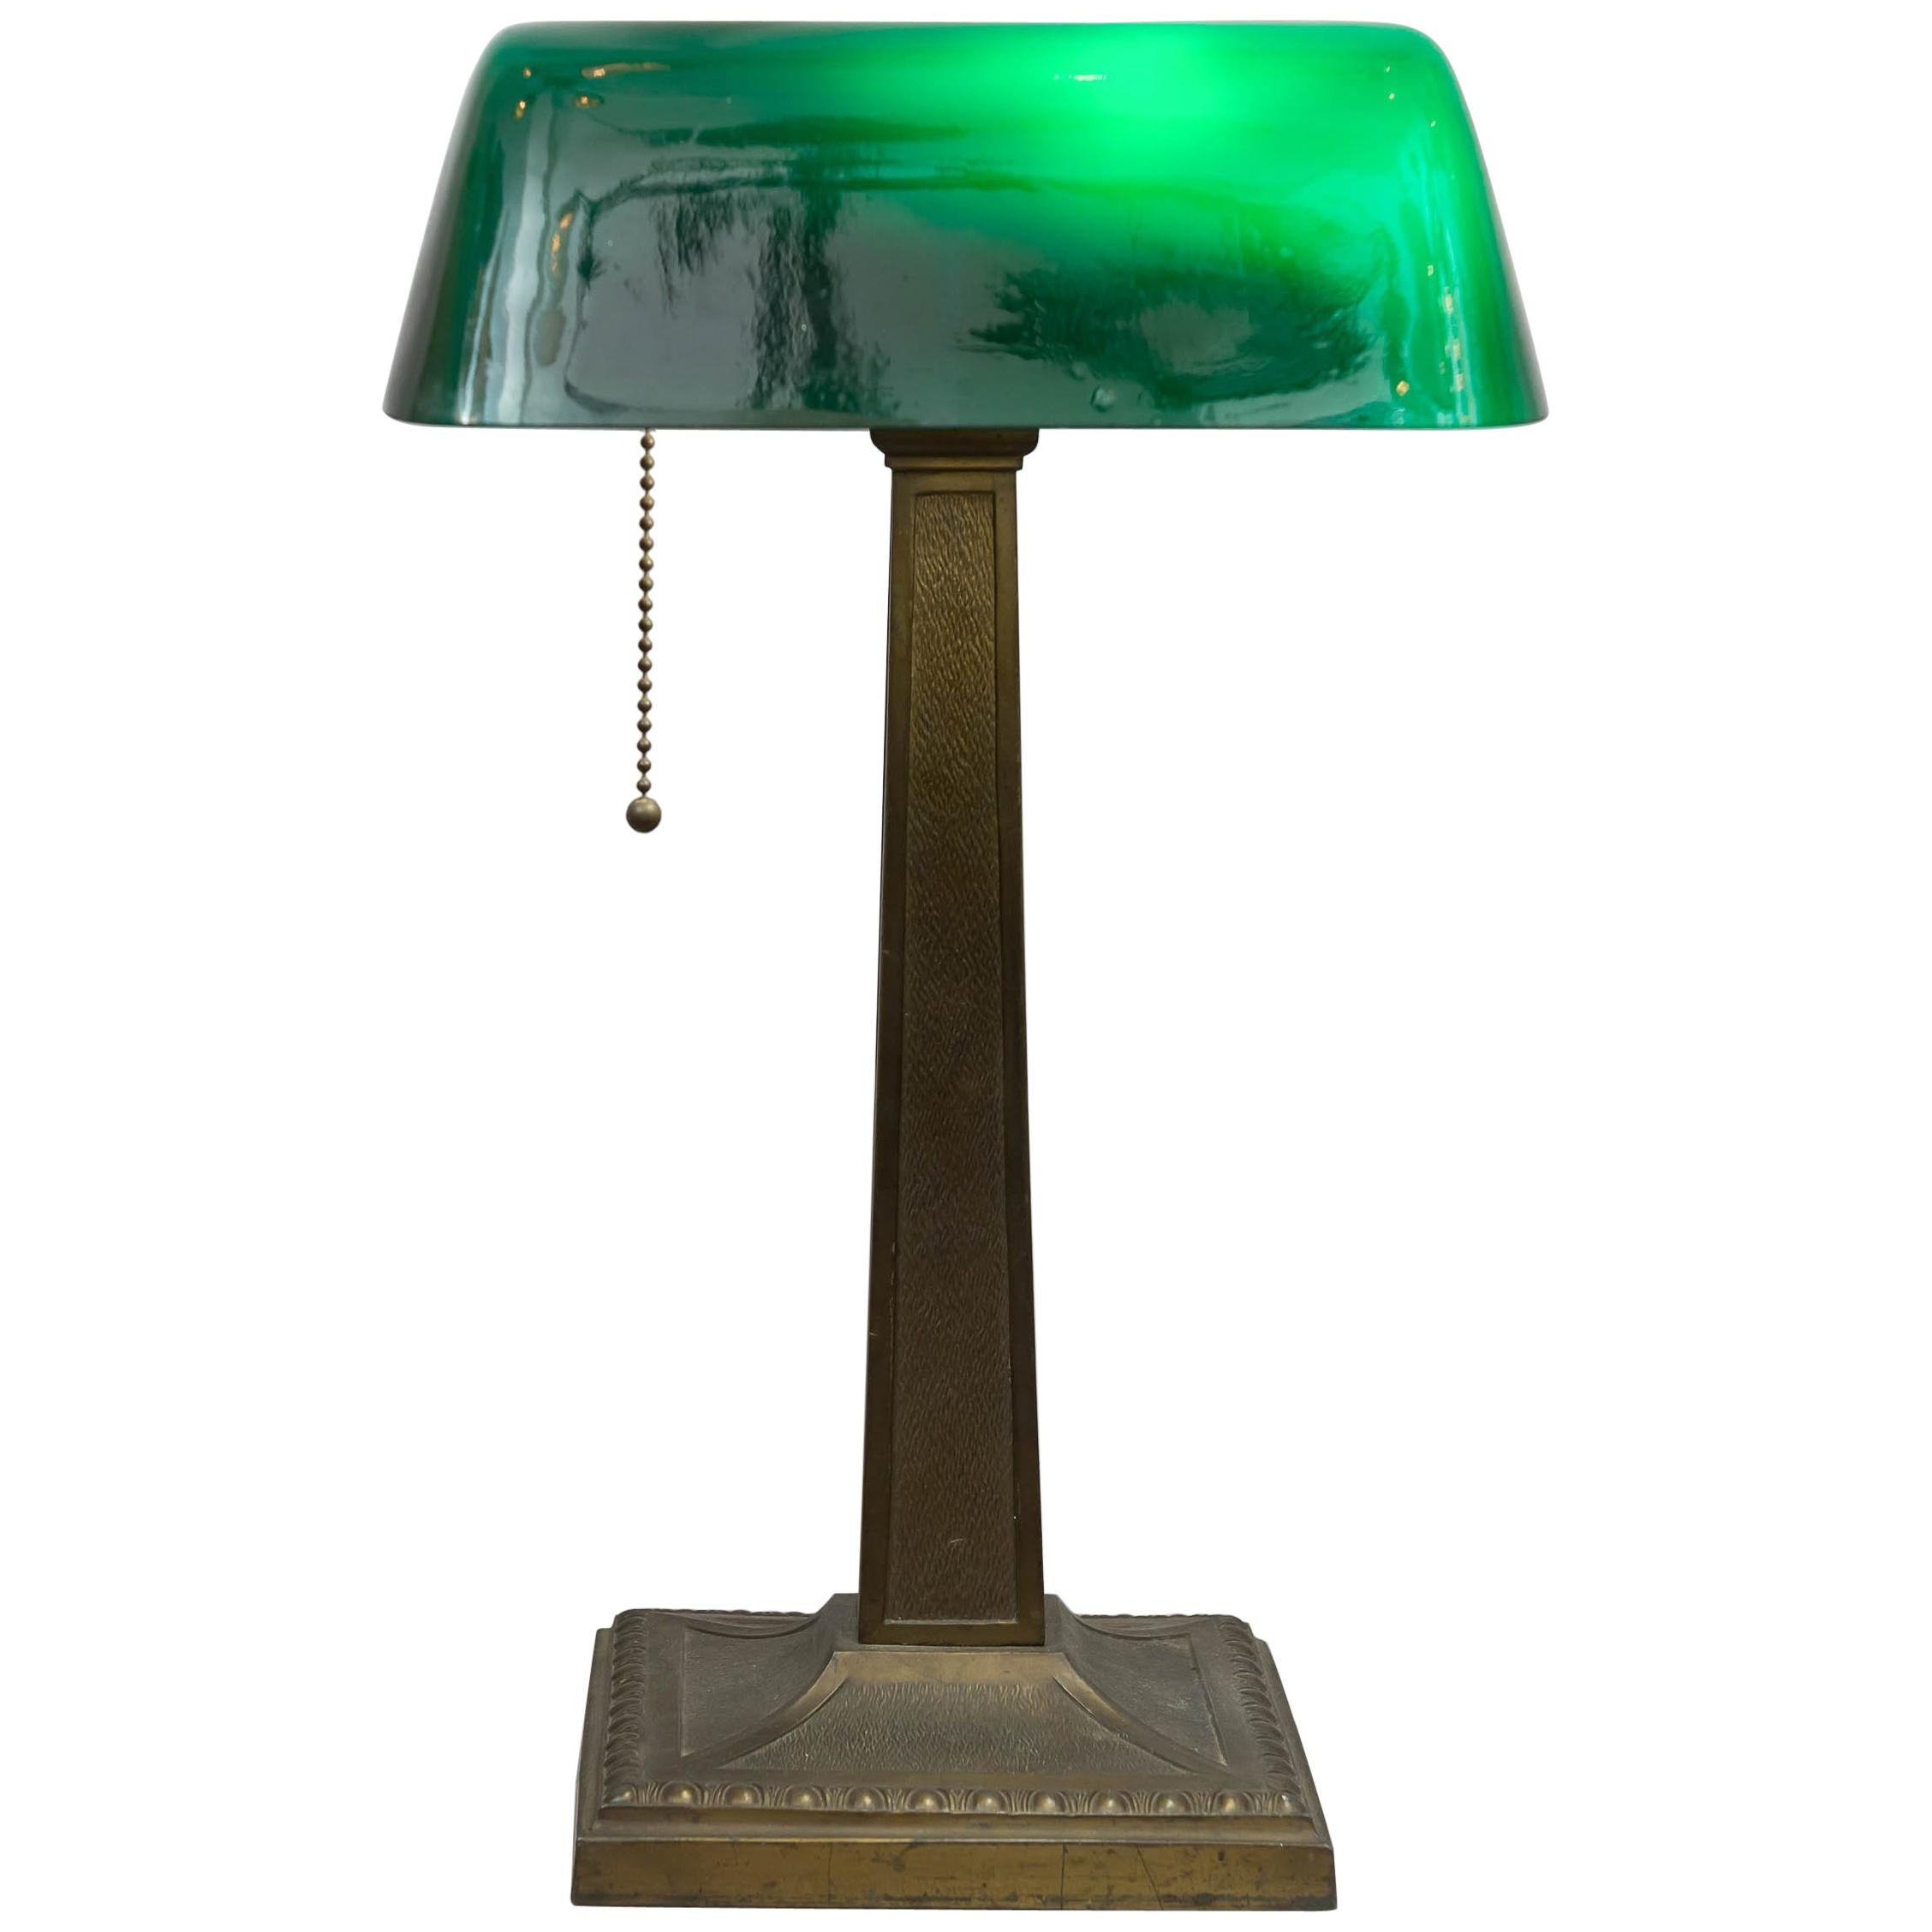 Antique Green Shade Banker's Lamp, Signed Amronlite